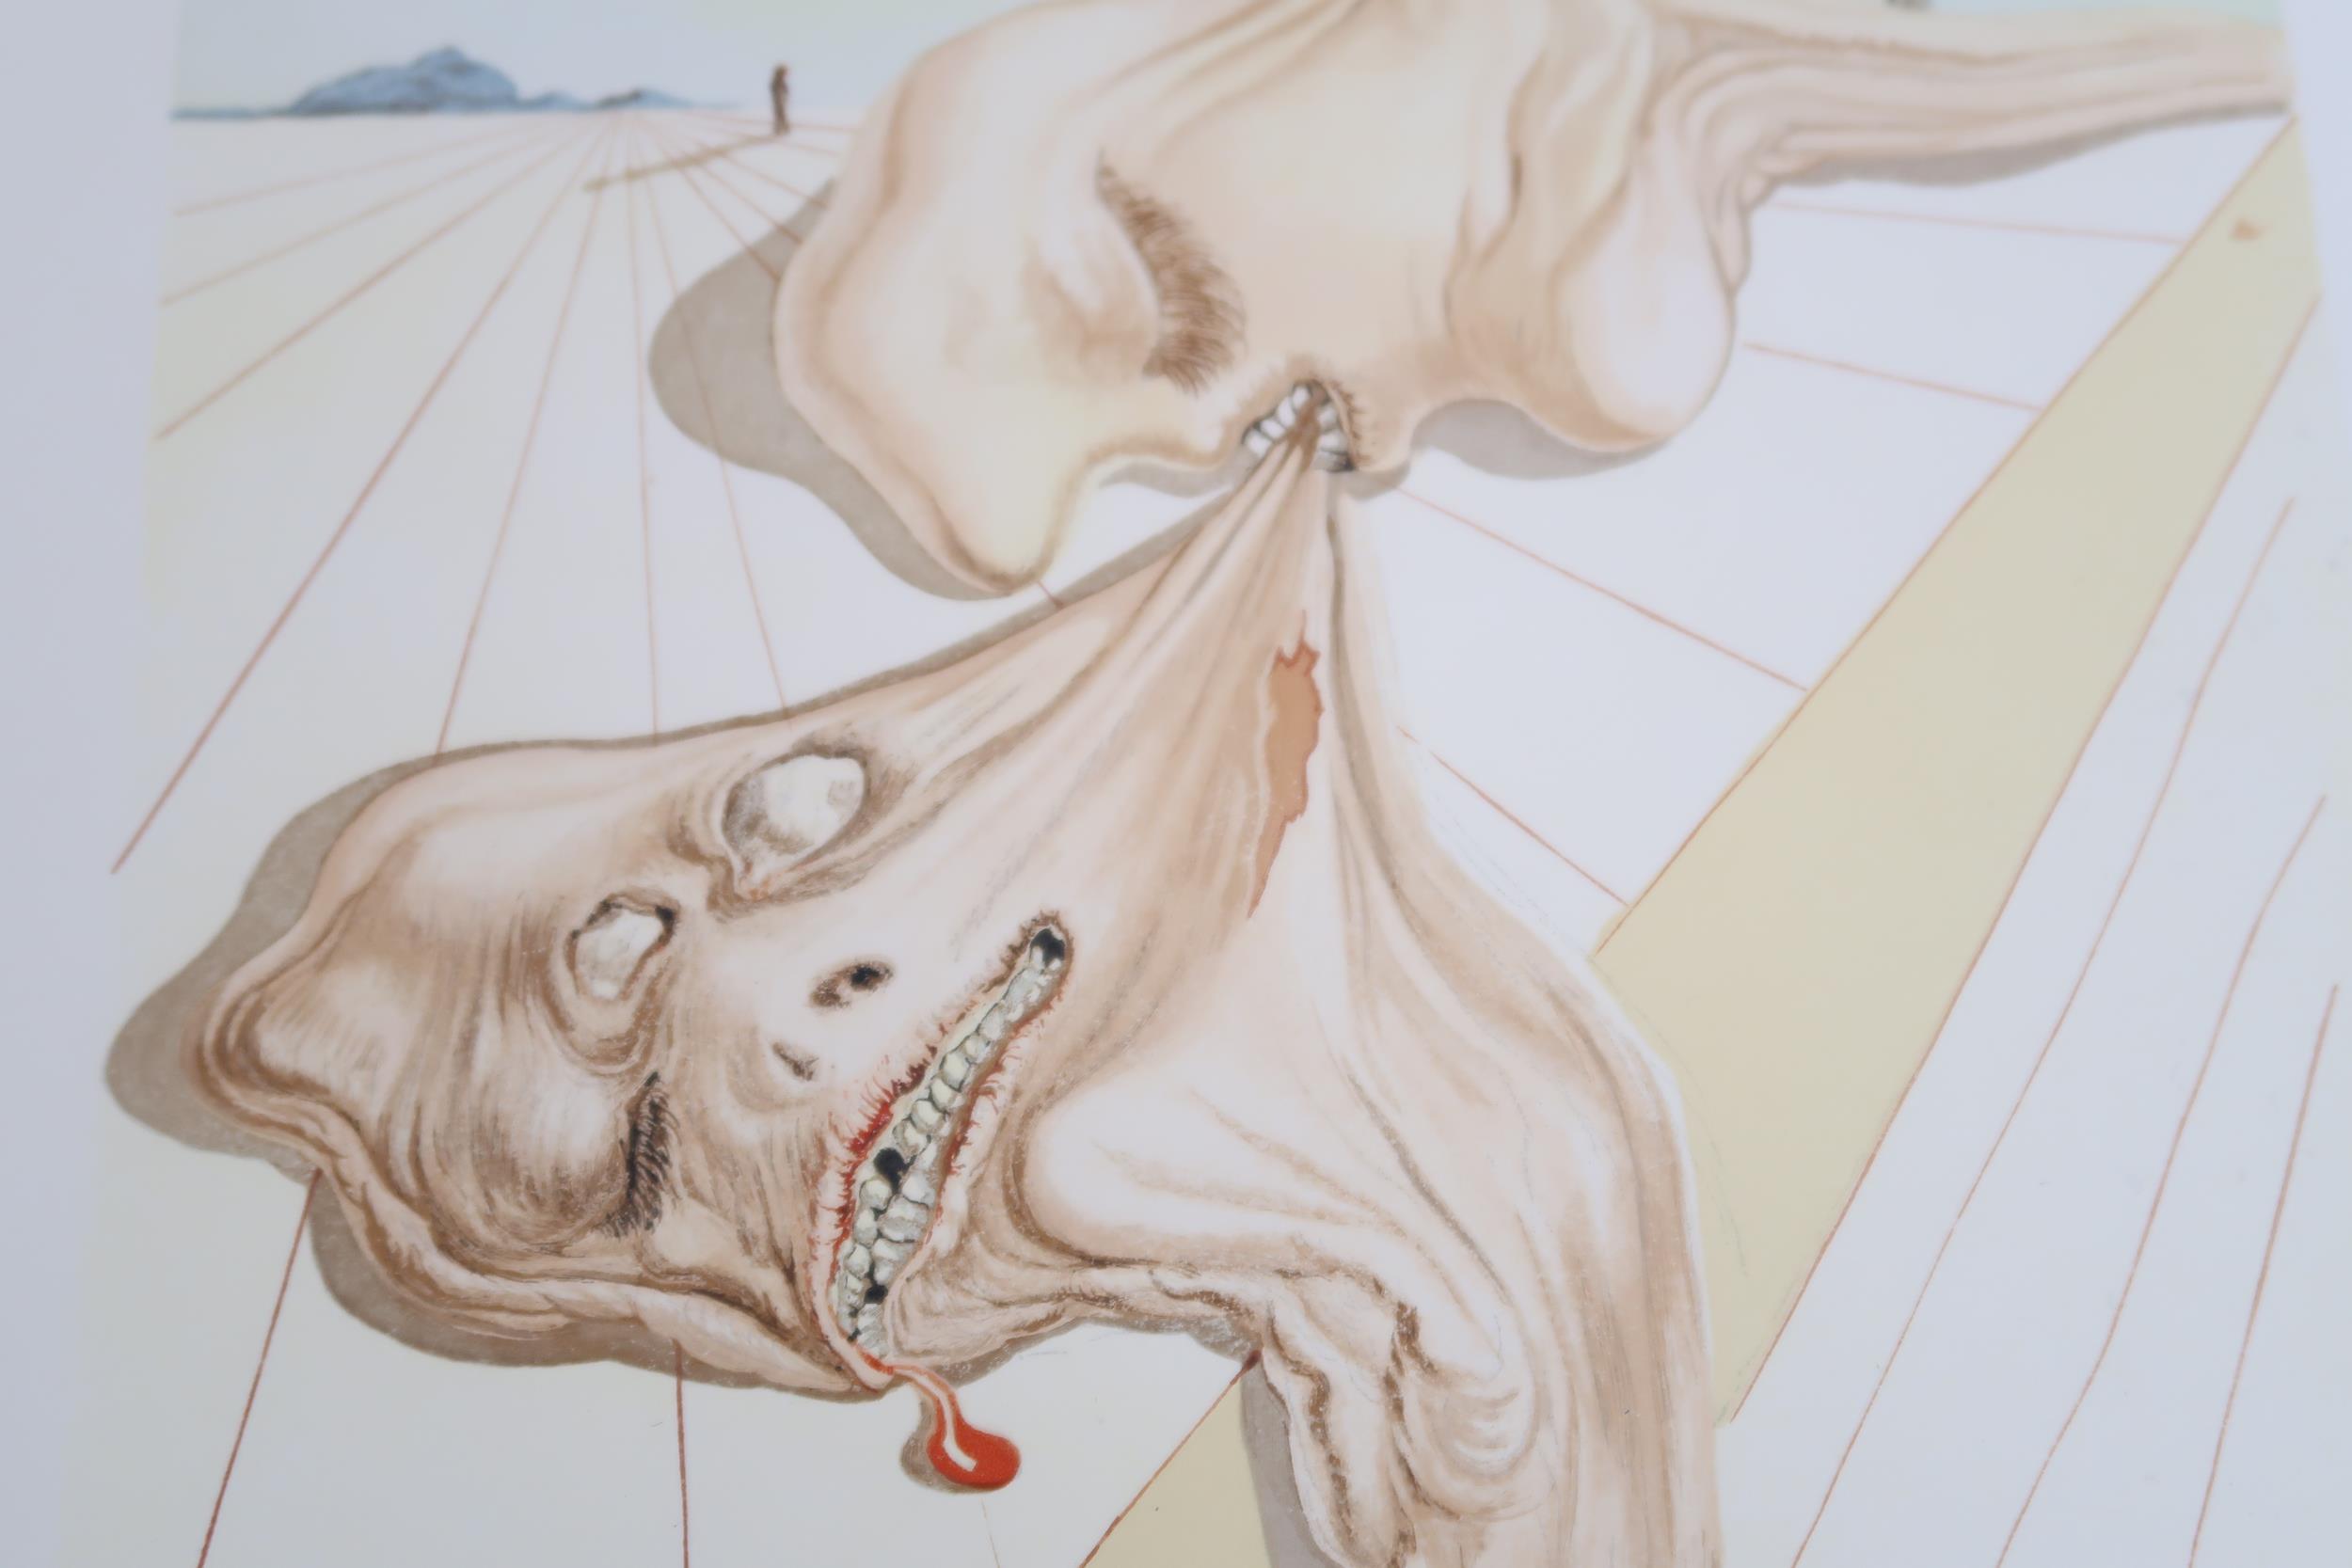 Salvador Dali - Print, unframed - Gianni Schicchis Bite Inferno - 18cm x 25cm - signed - Image 2 of 2